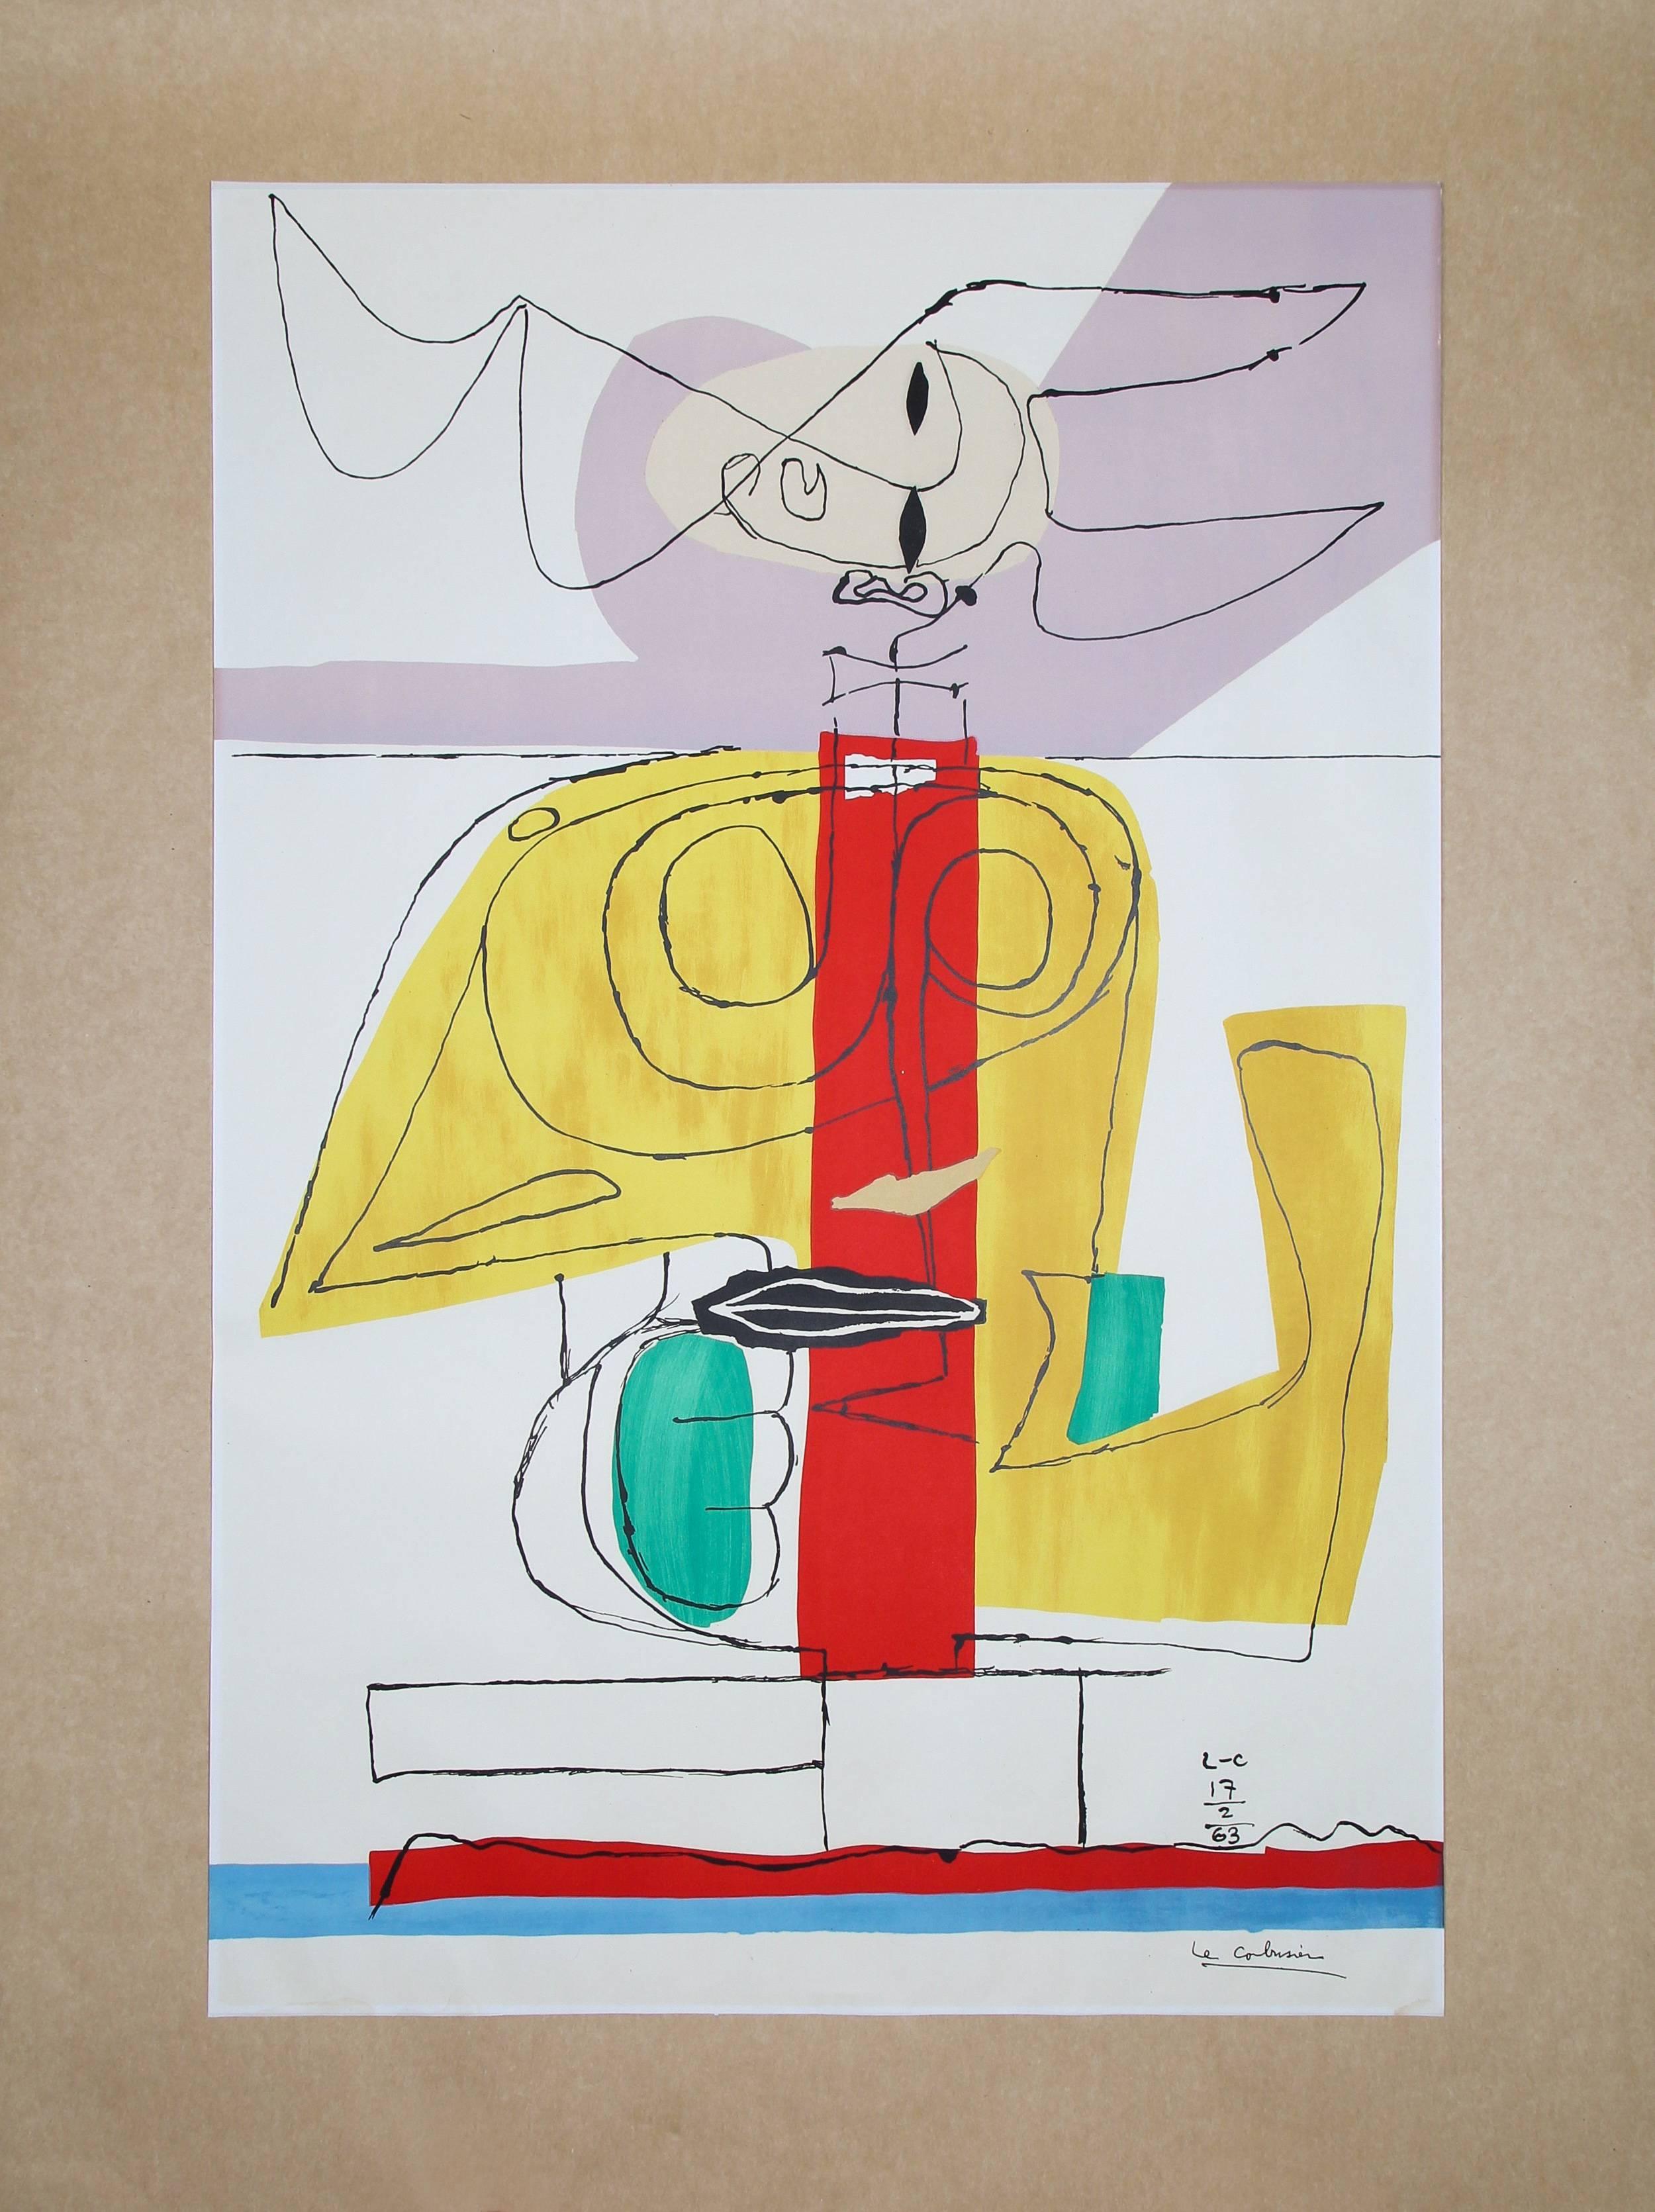 Le Corbusier
Large and rare color lithograph 